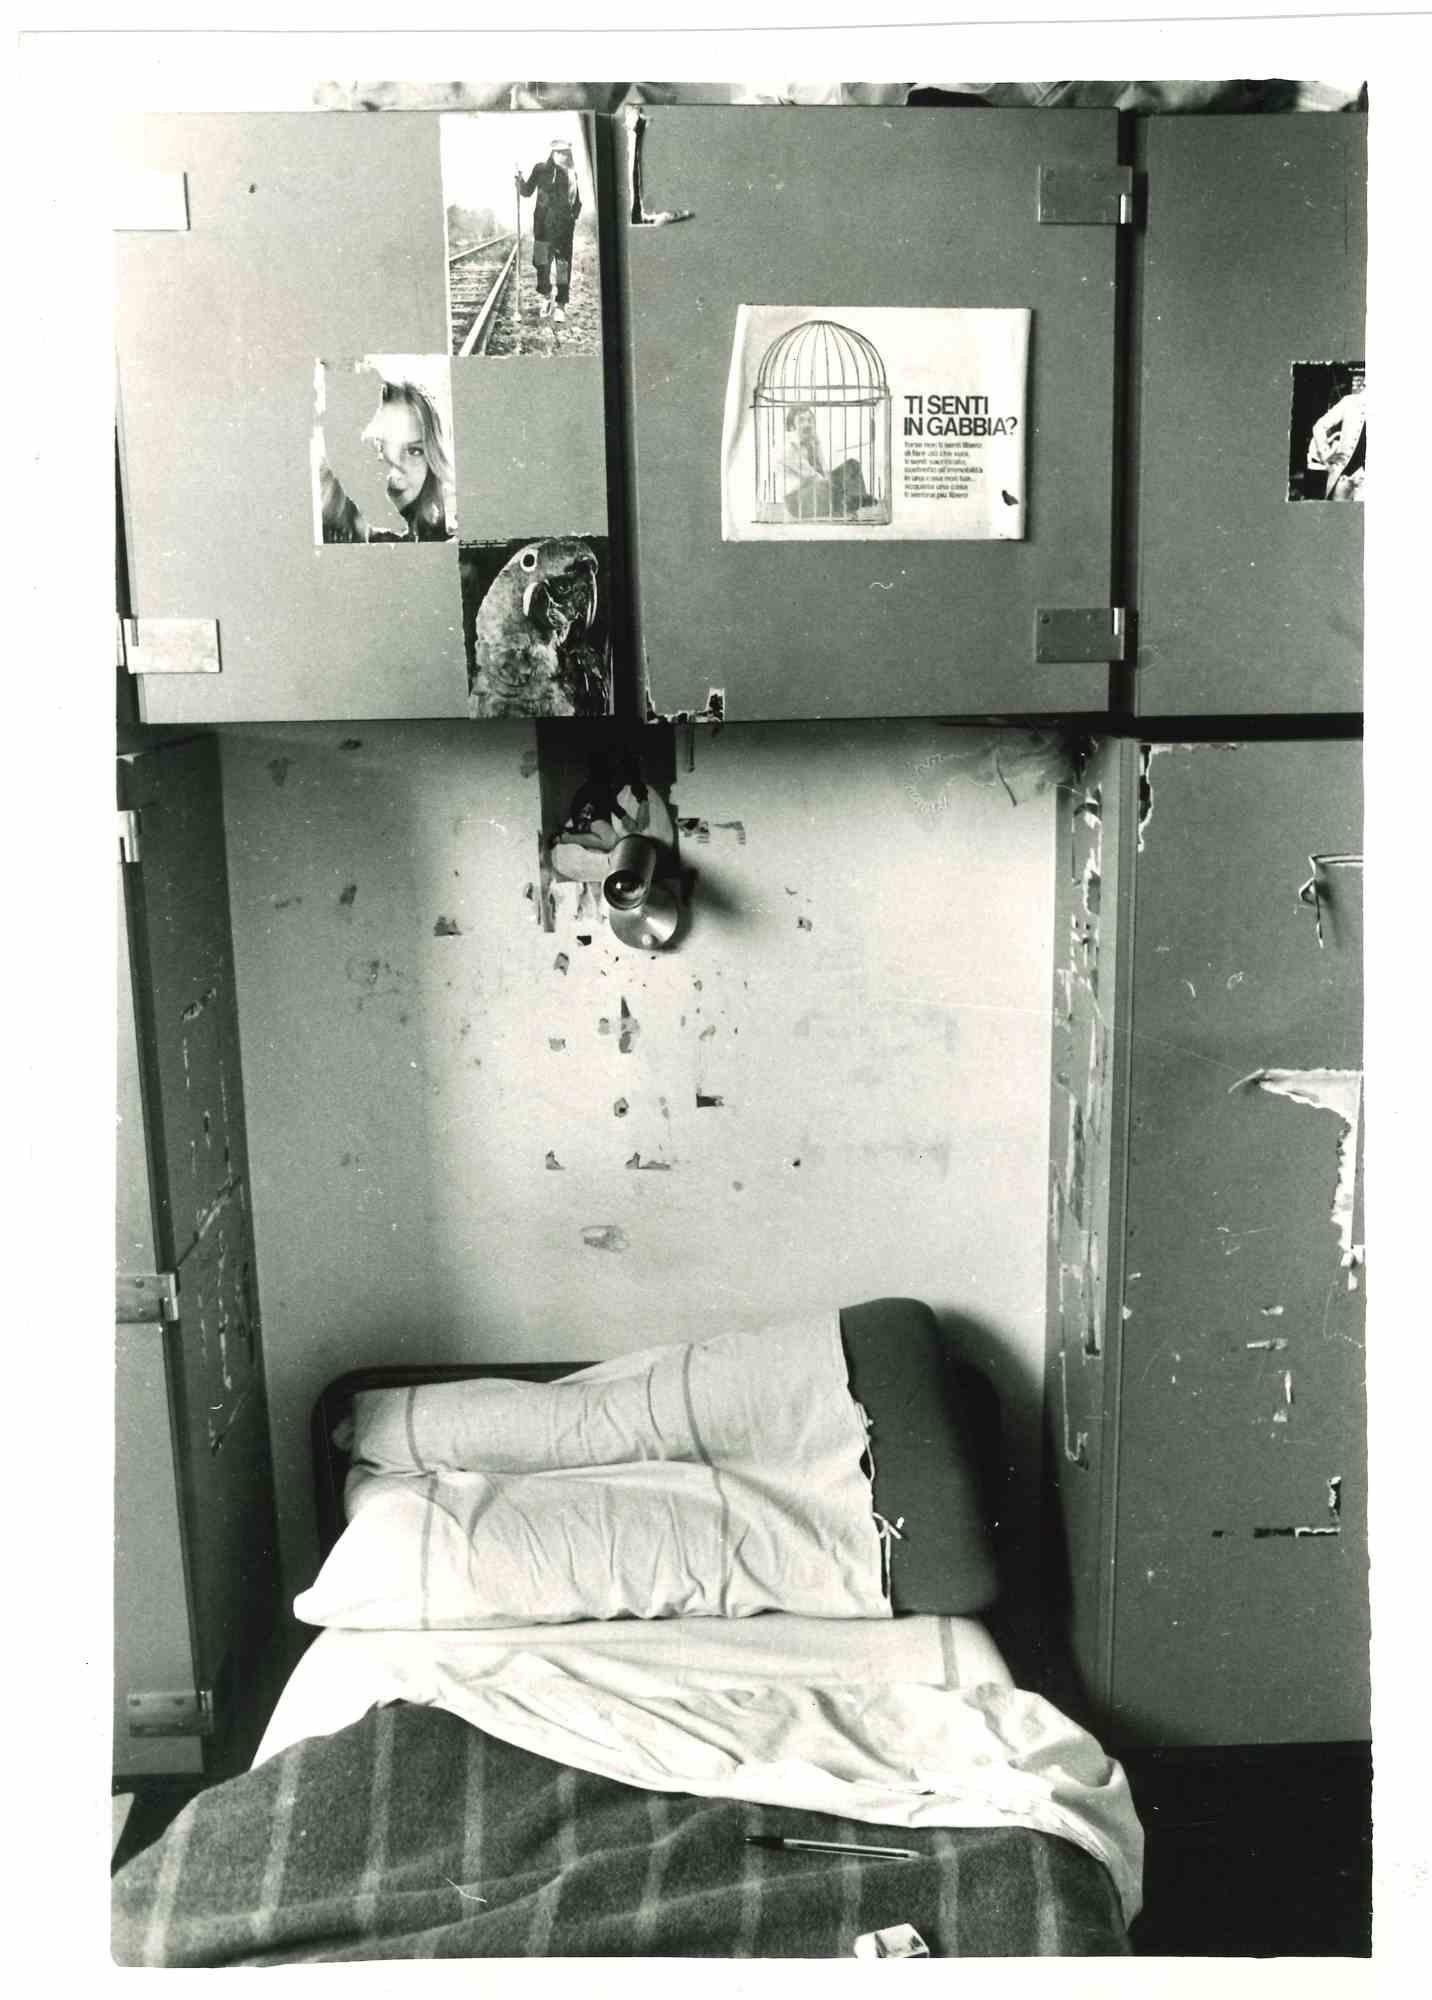 Unknown Portrait Photograph - Historical Photo of Prison - 1970s